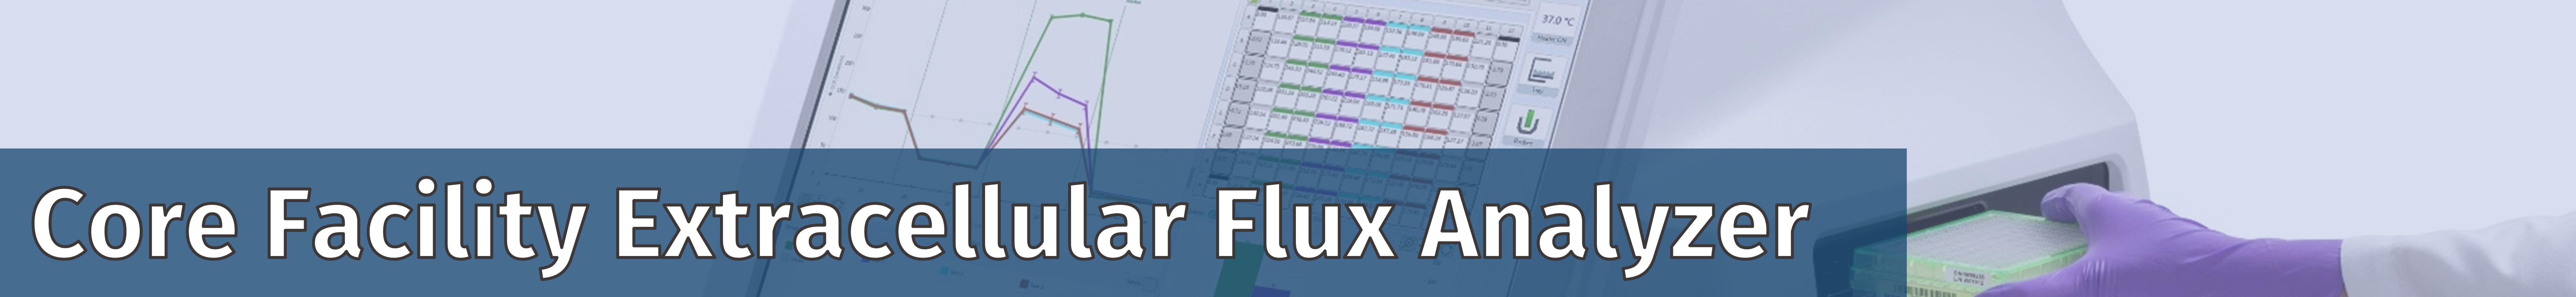 CF Extracellular Flux Analyzer banner title